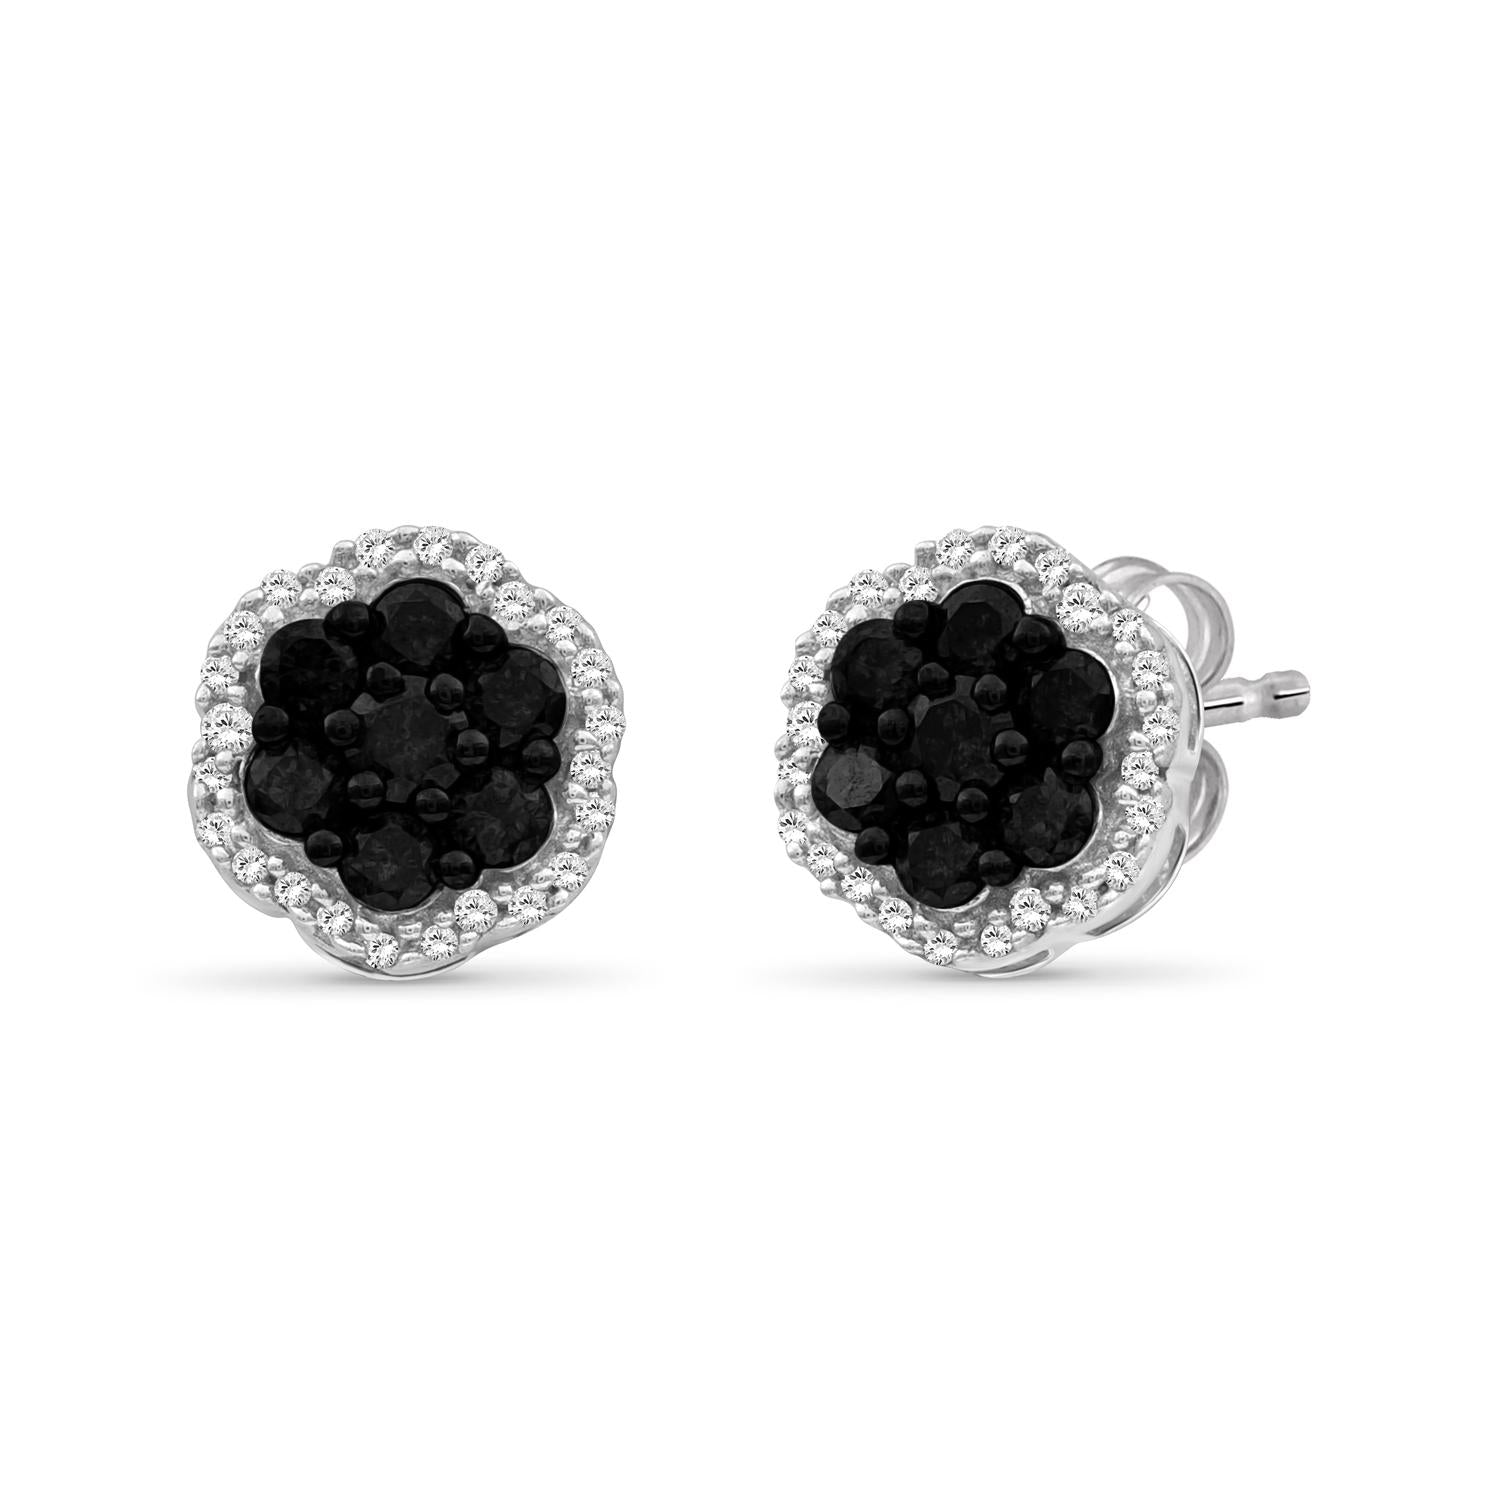 1.00 Carat Black & White Diamond Cluster Earrings in Sterling Silver